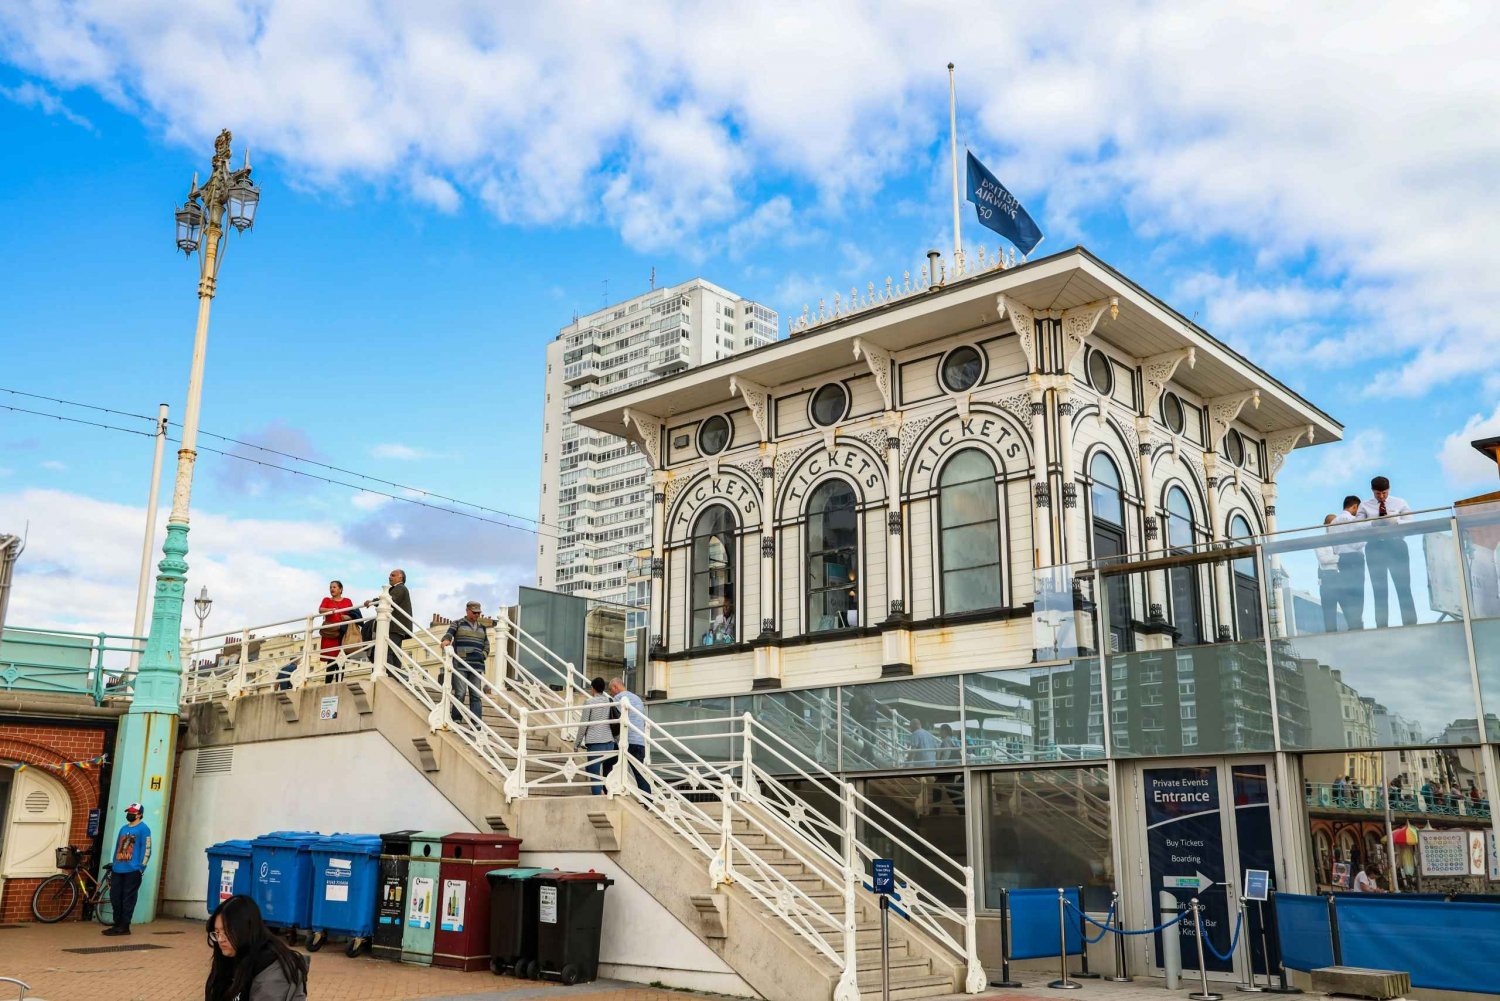 Brighton: Det kongelige feriestedets eventyr - et byspill med ledetråder